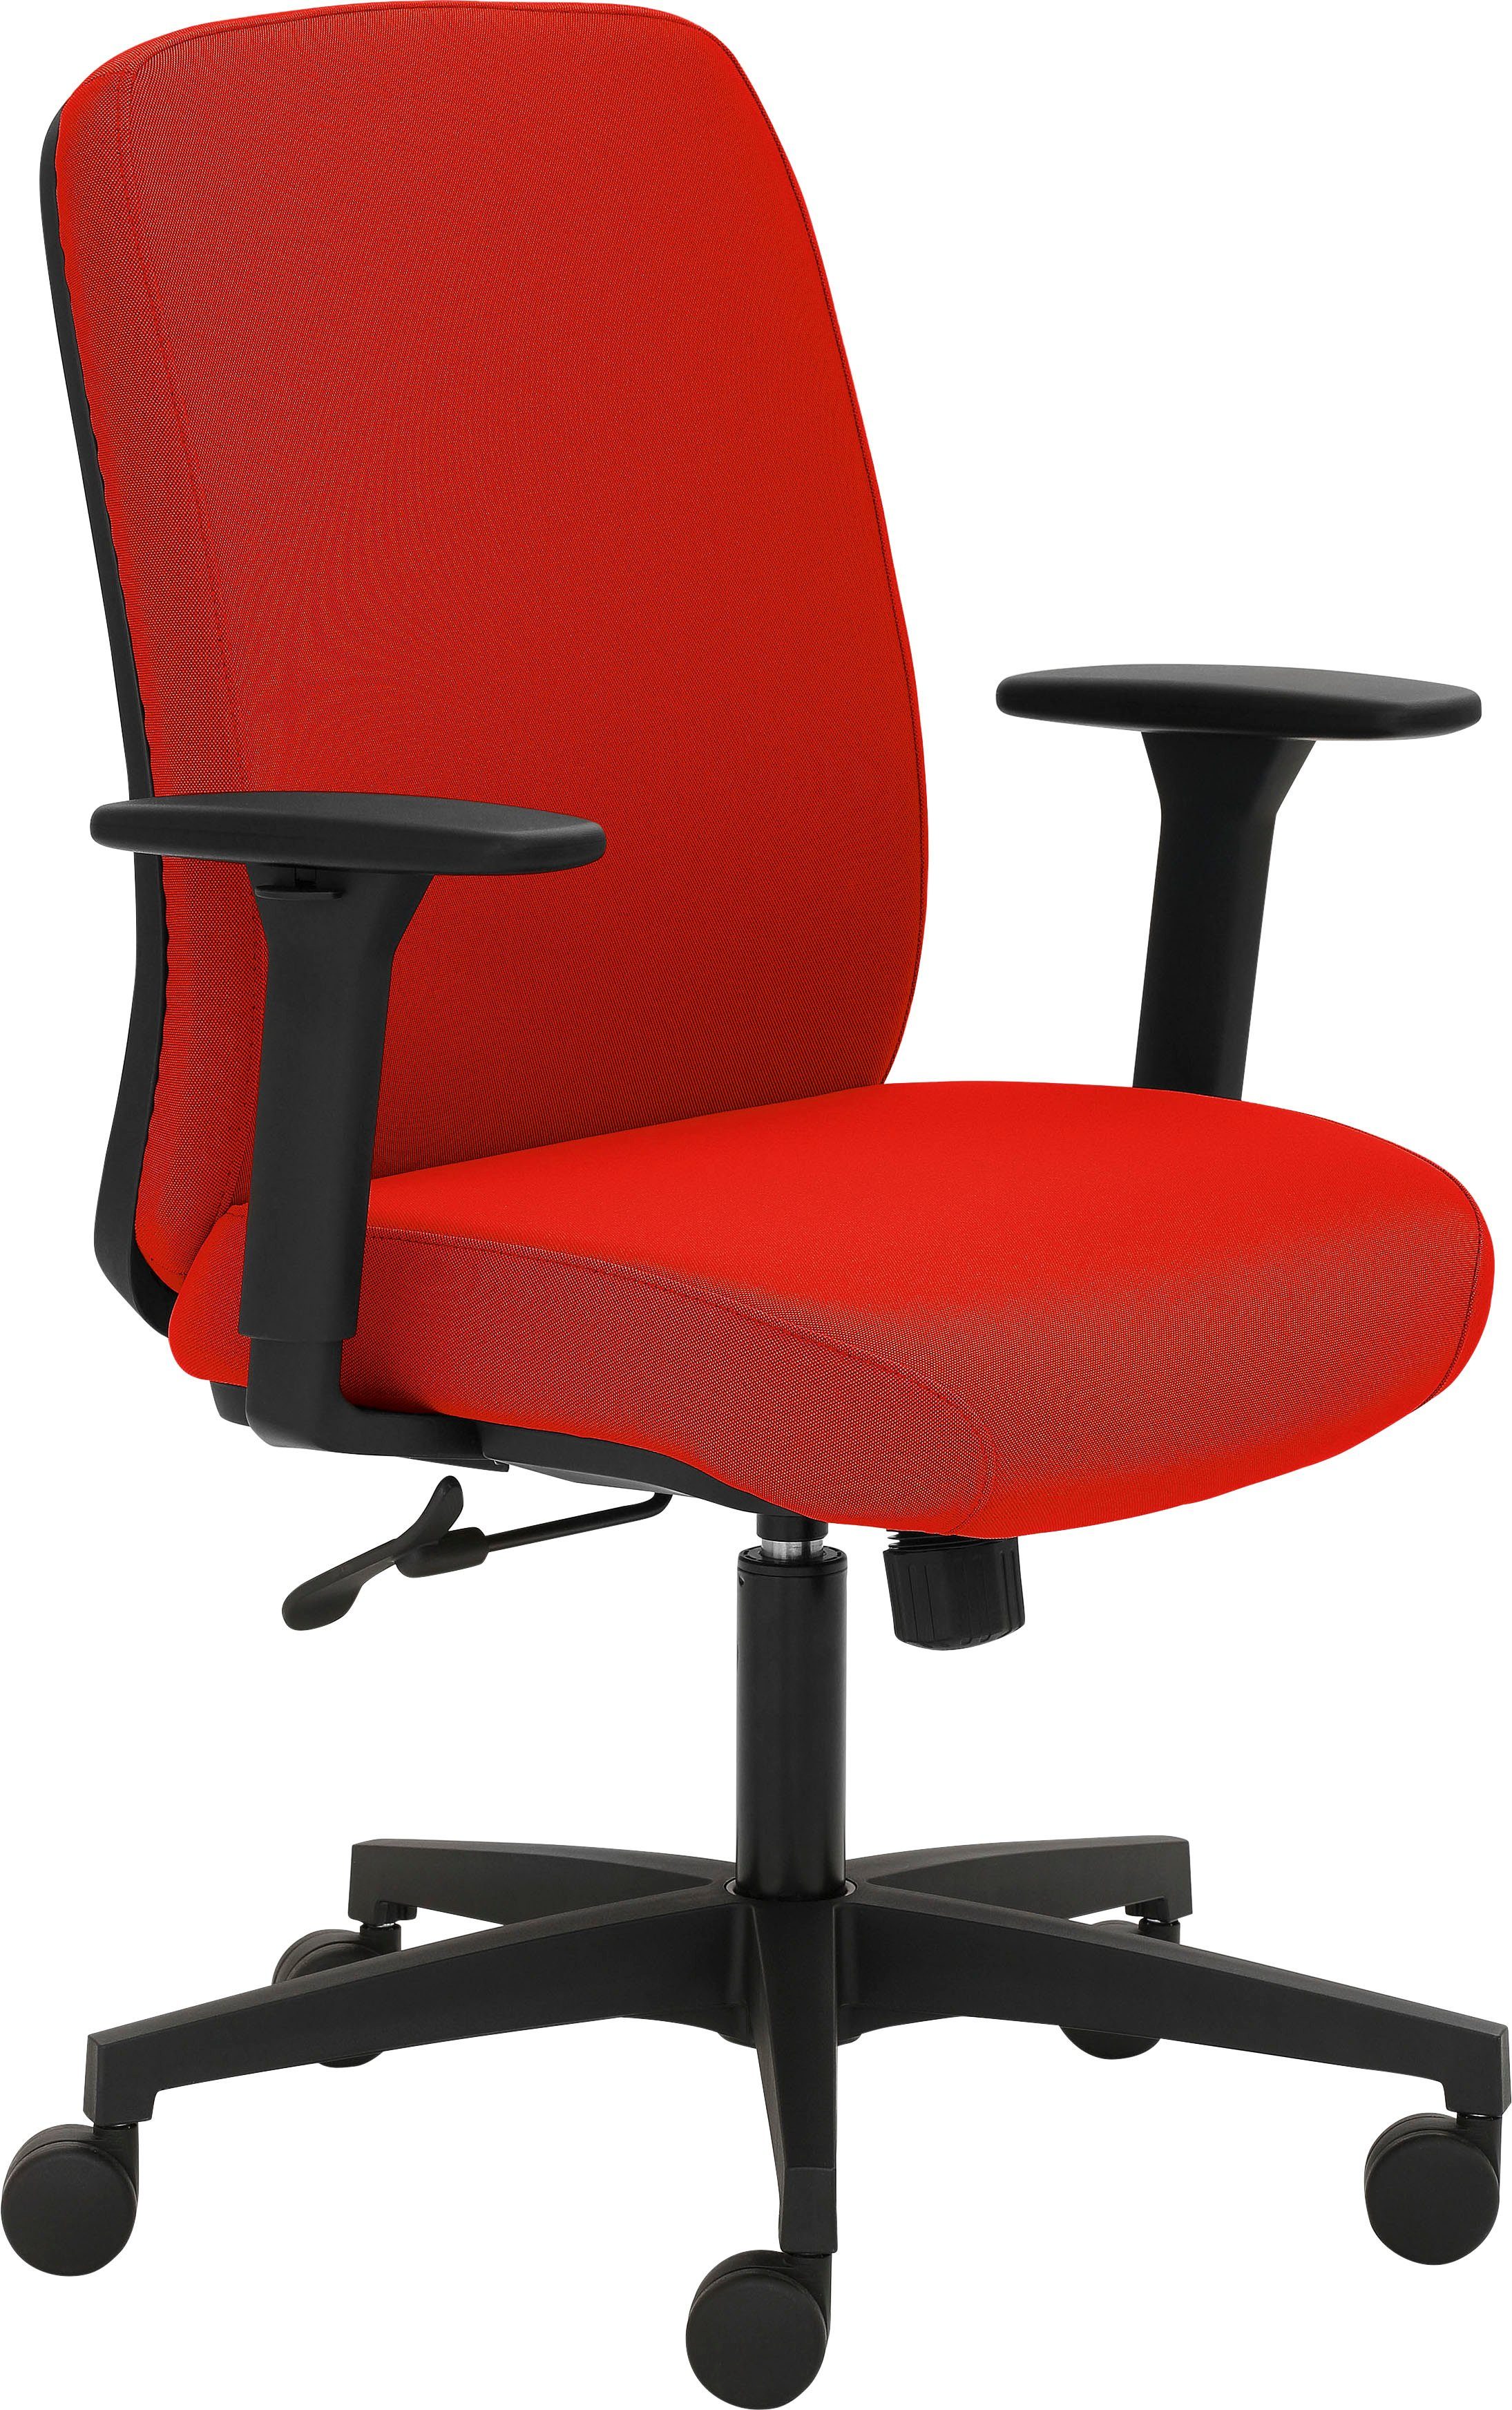 Kirschrot Kirschrot Sitzmöbel extra Sitzkomfort maximalen | Drehstuhl Polsterung Mayer GS-zertifiziert, 2219, für starke